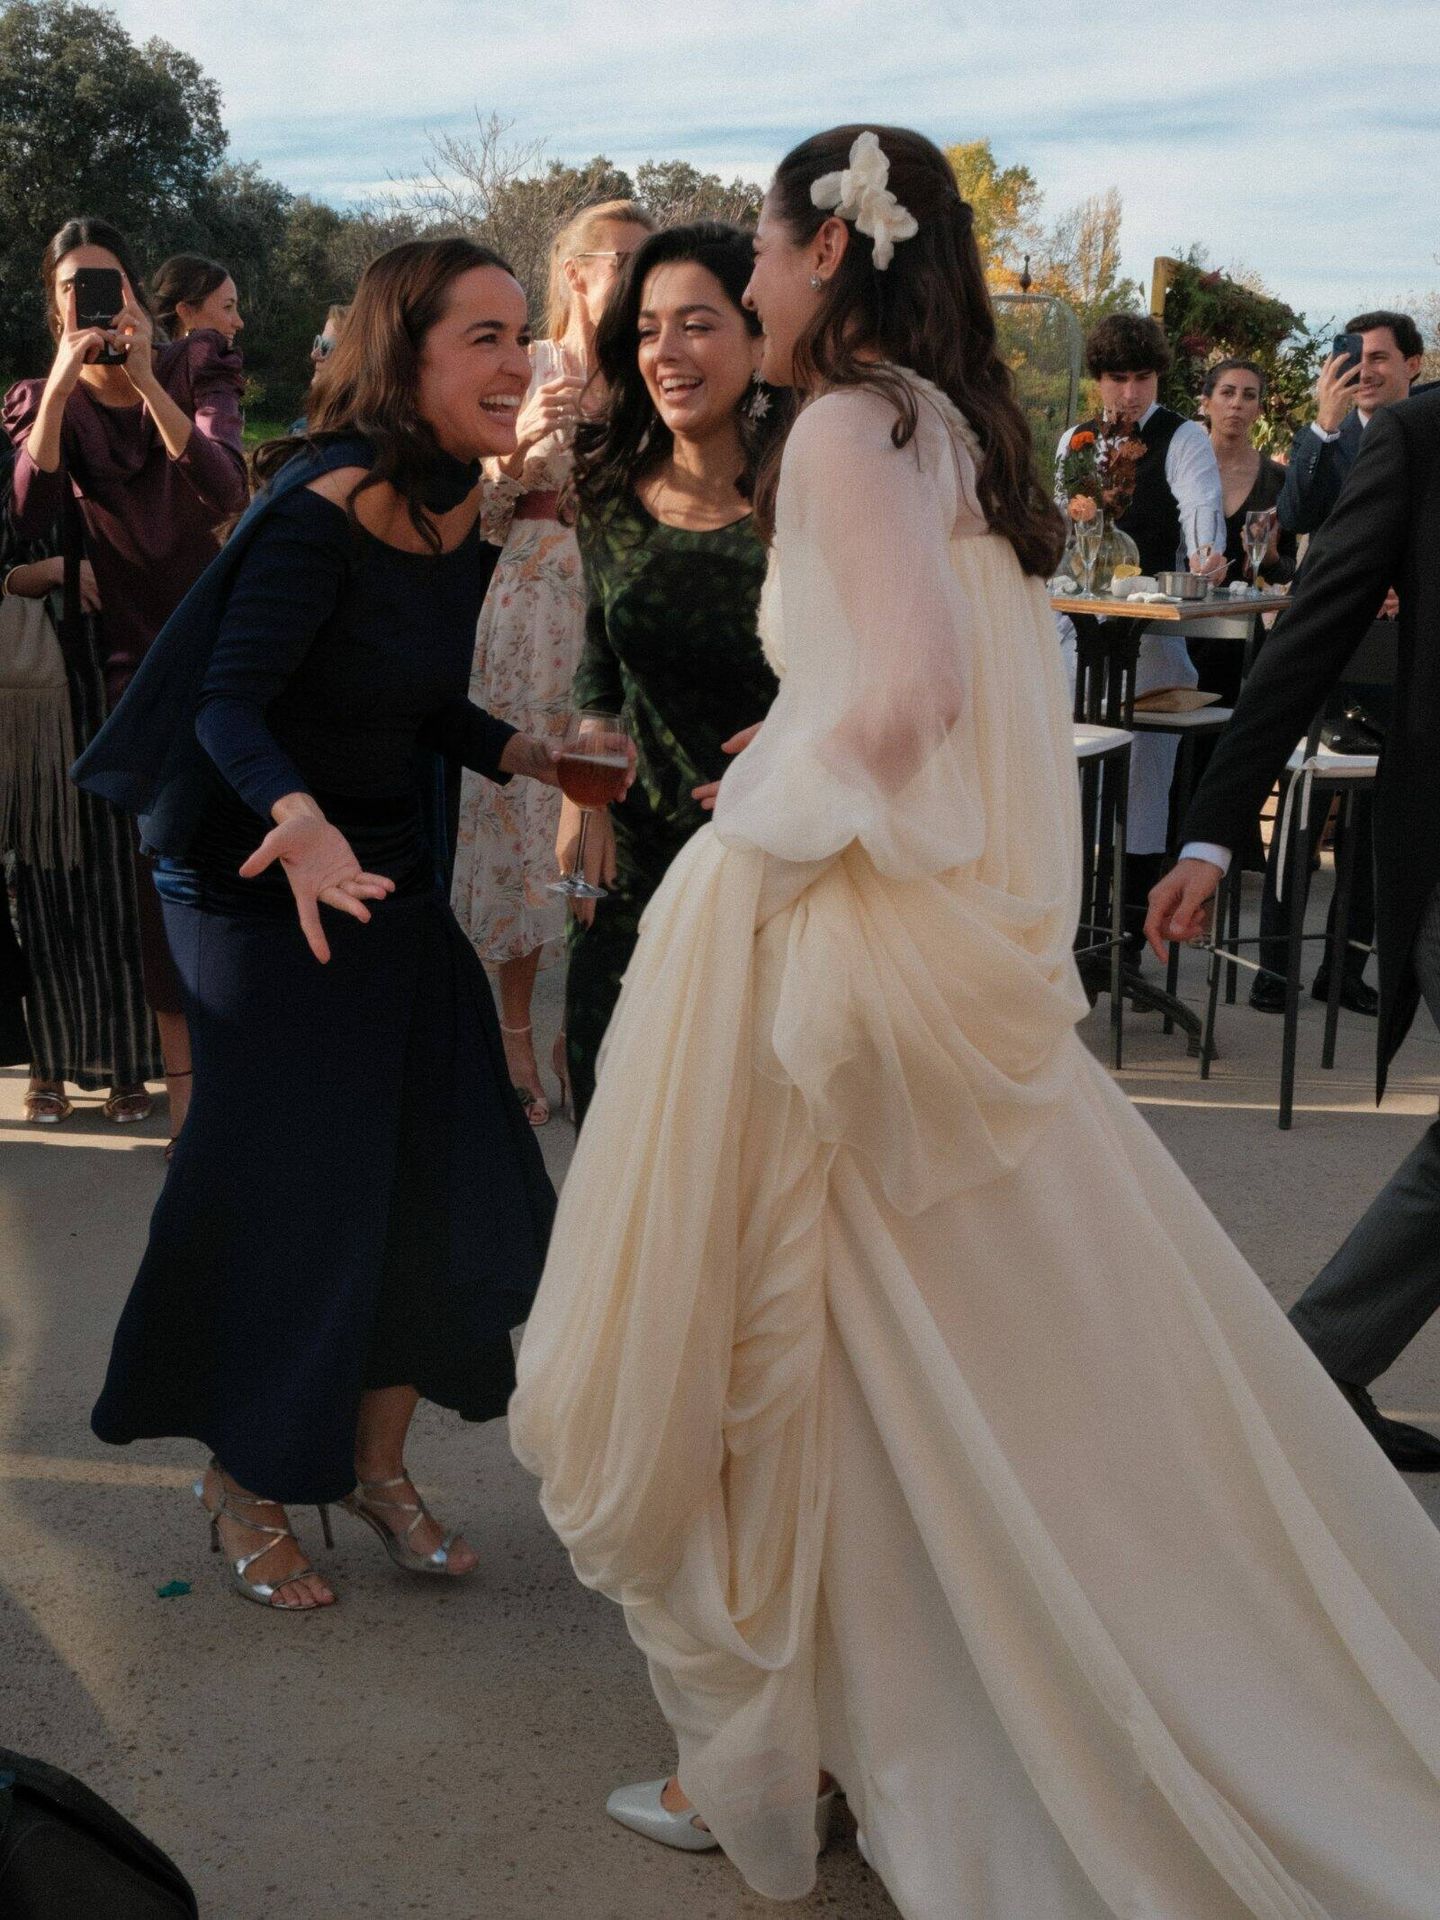 La boda de Cristina, la hermana de la diseñadora Isabel Núñez. (INNDU)